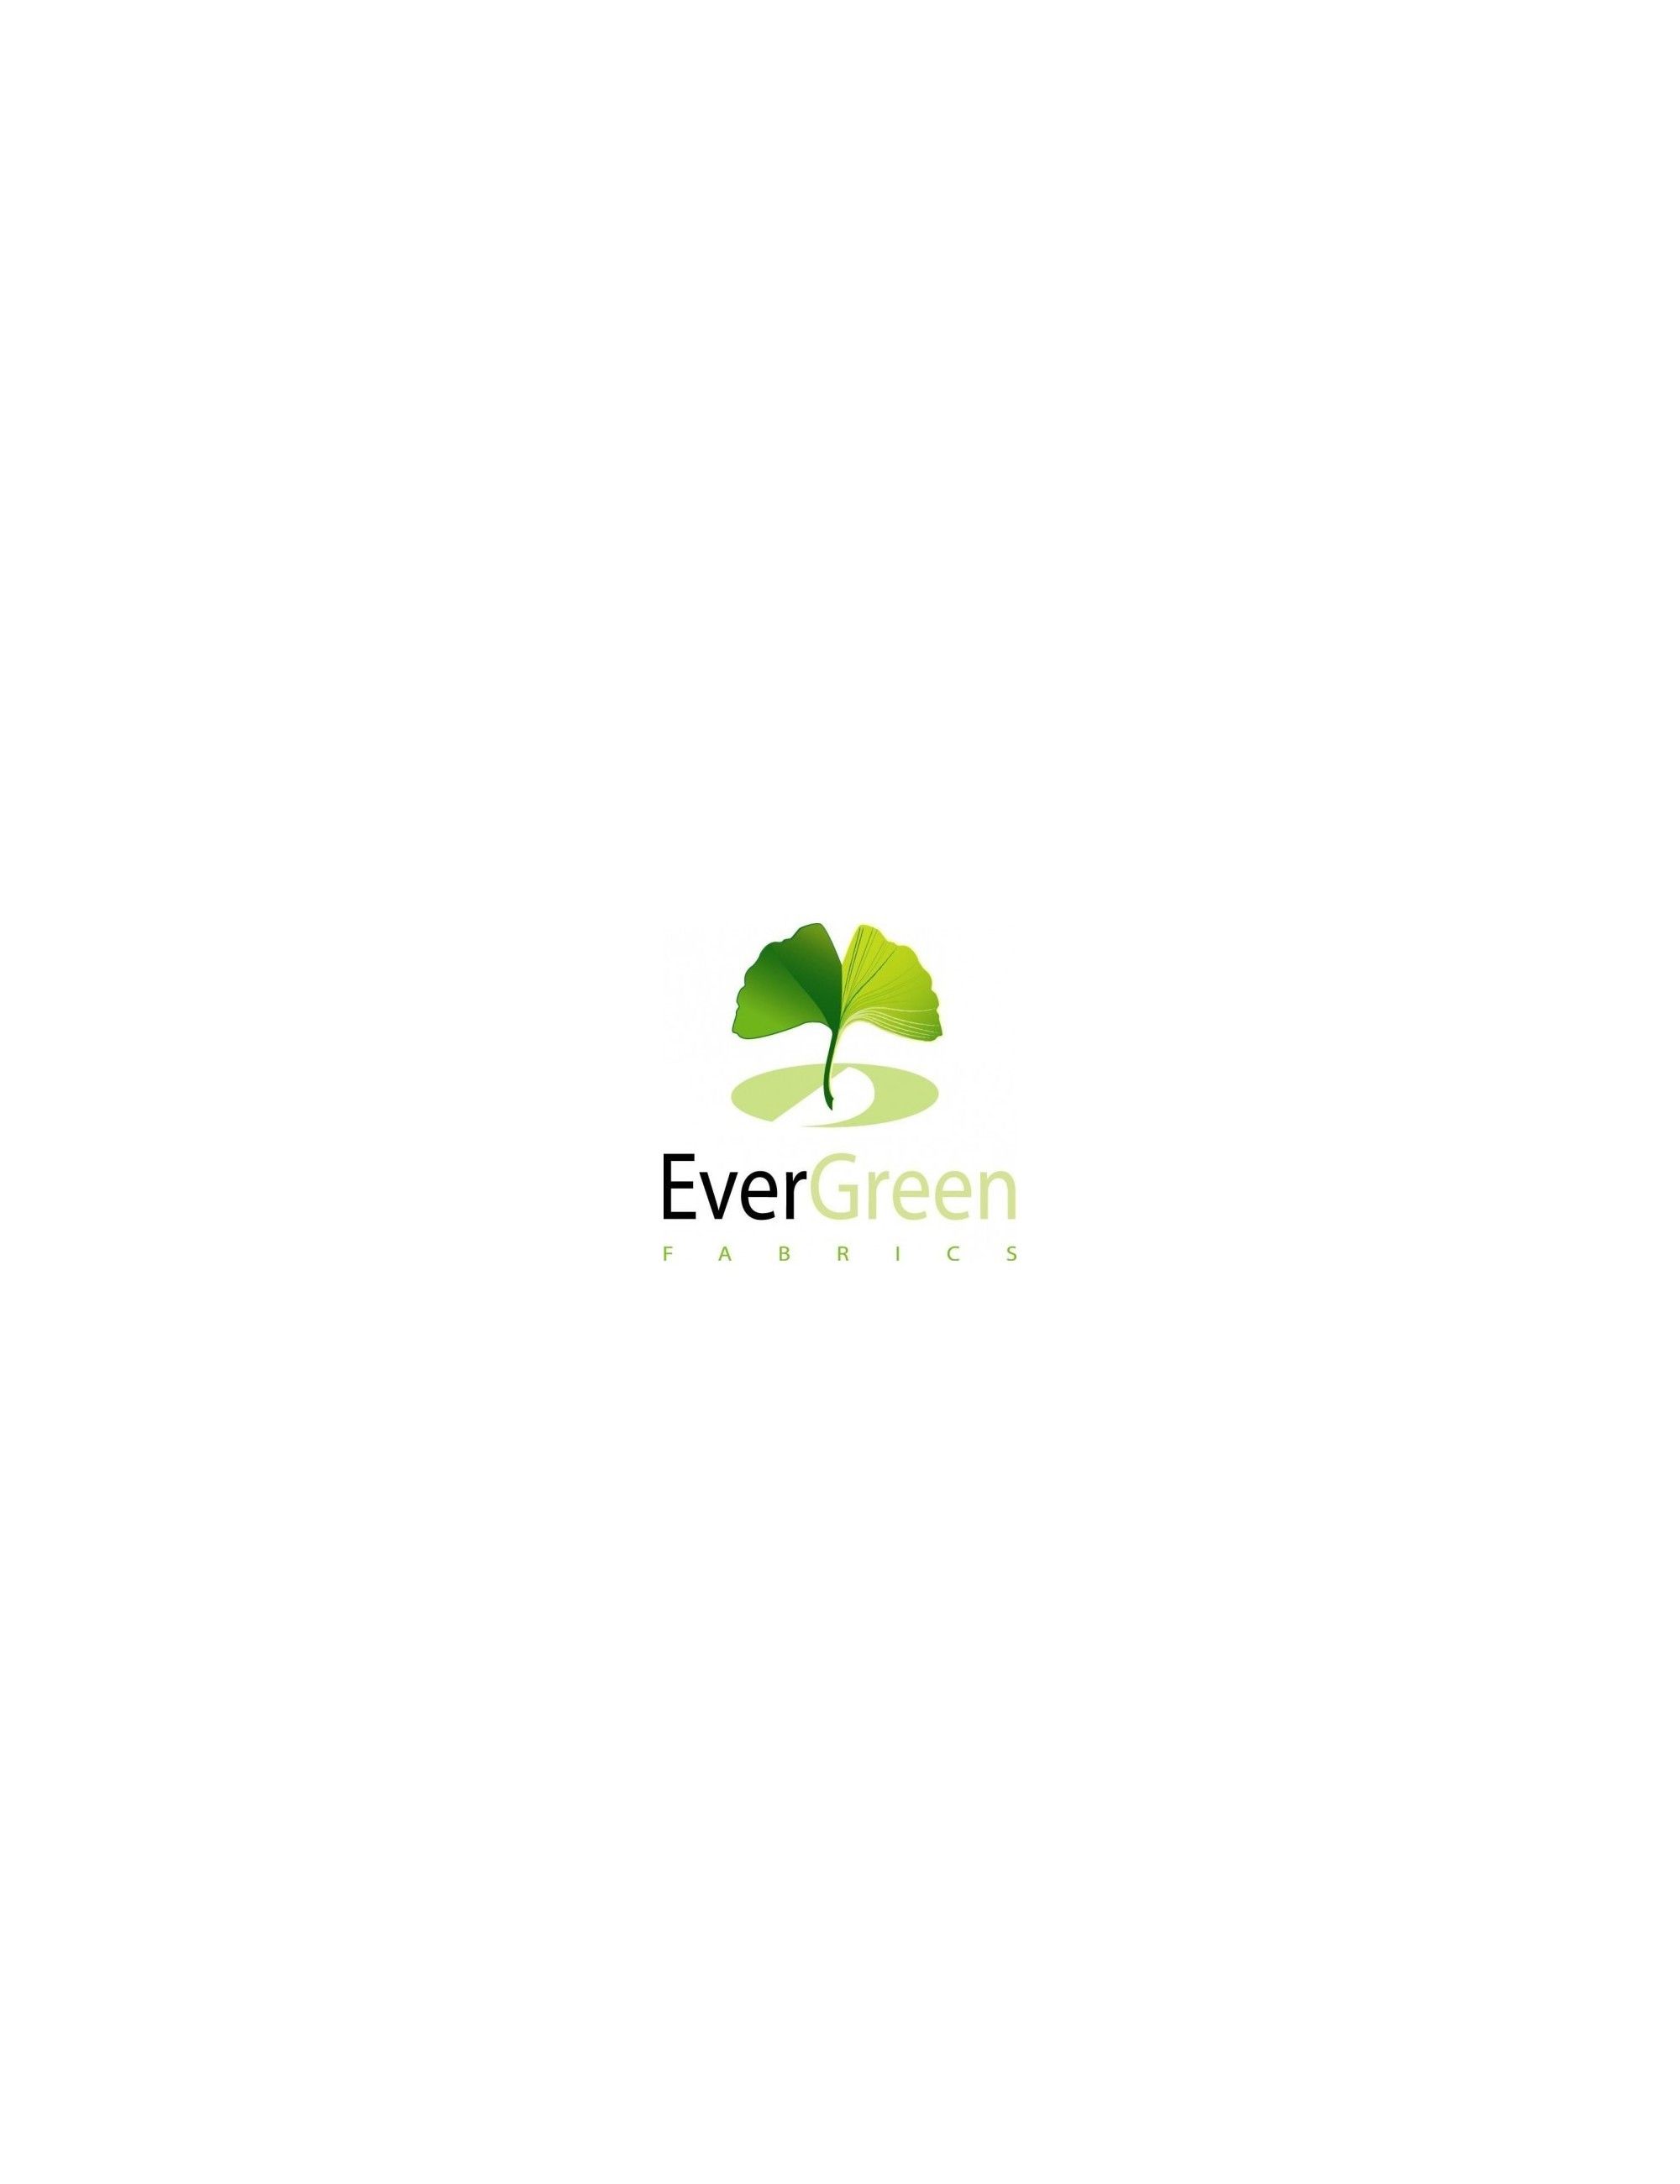 logo evergreen fabrics